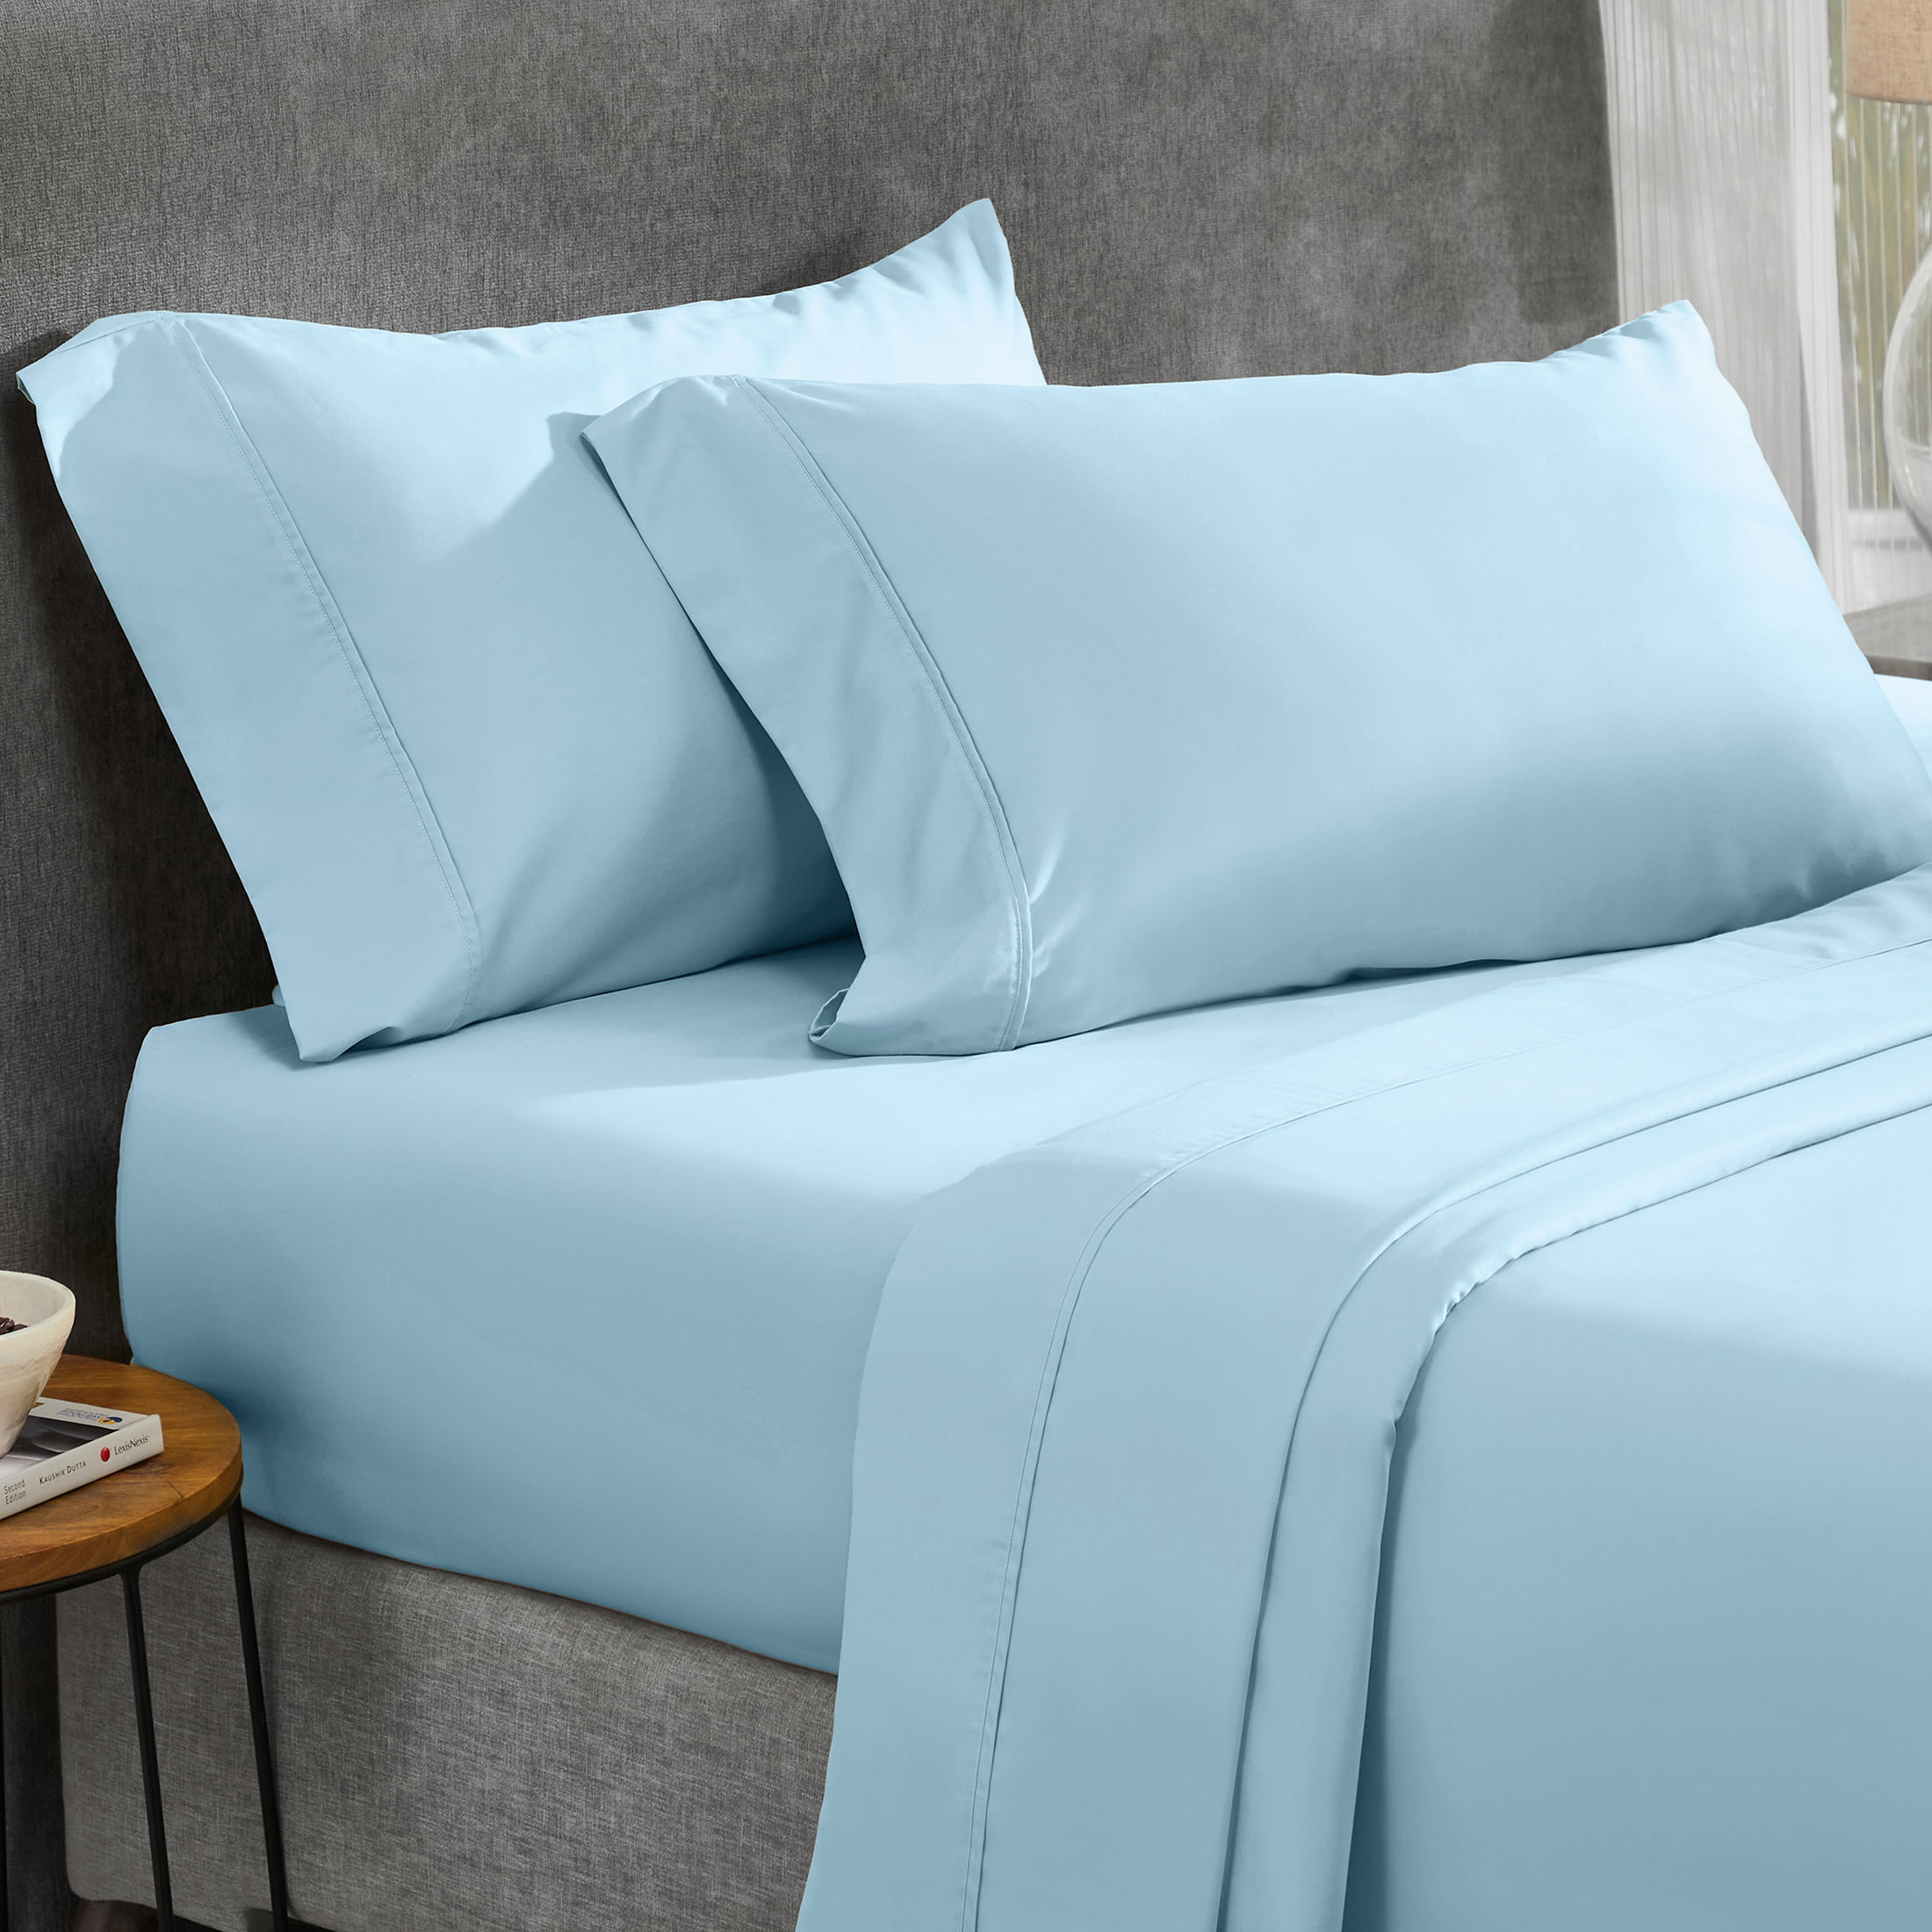 Details about   New SKY BLUE Wamsutta 400 Thread Count 100% Cotton Sateen STANDARD Pillowcases 